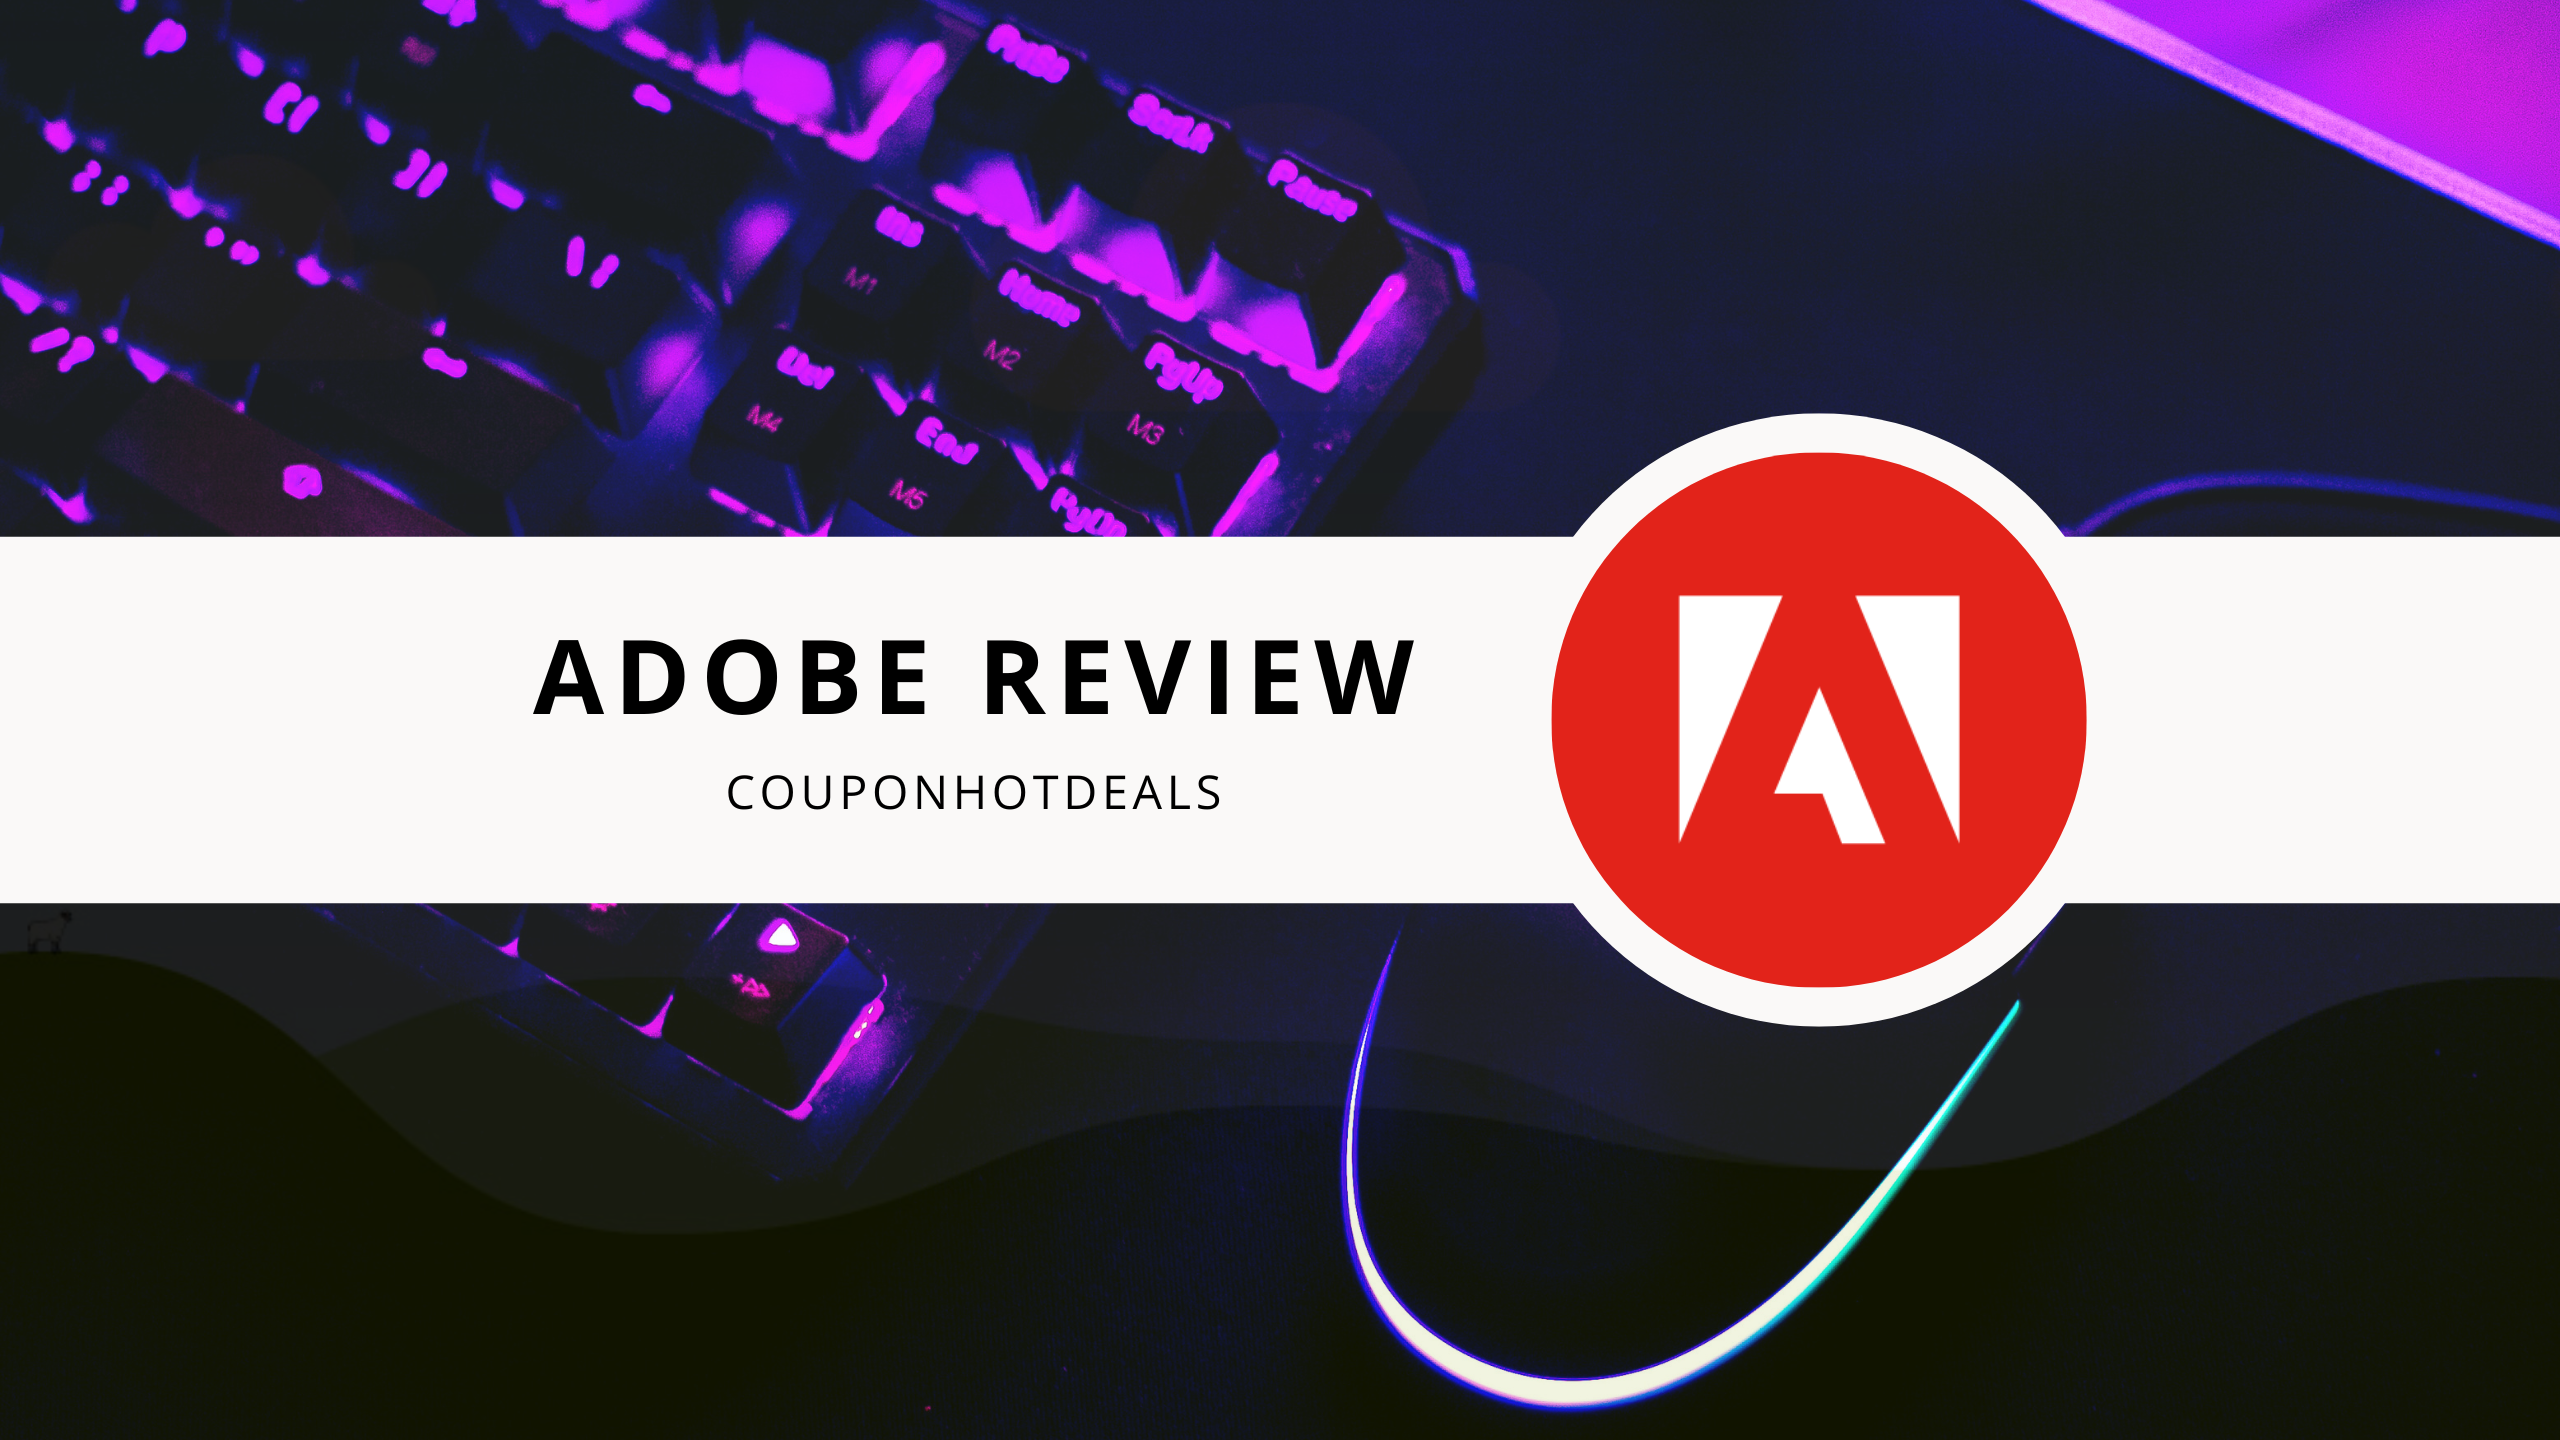 Adobe Review